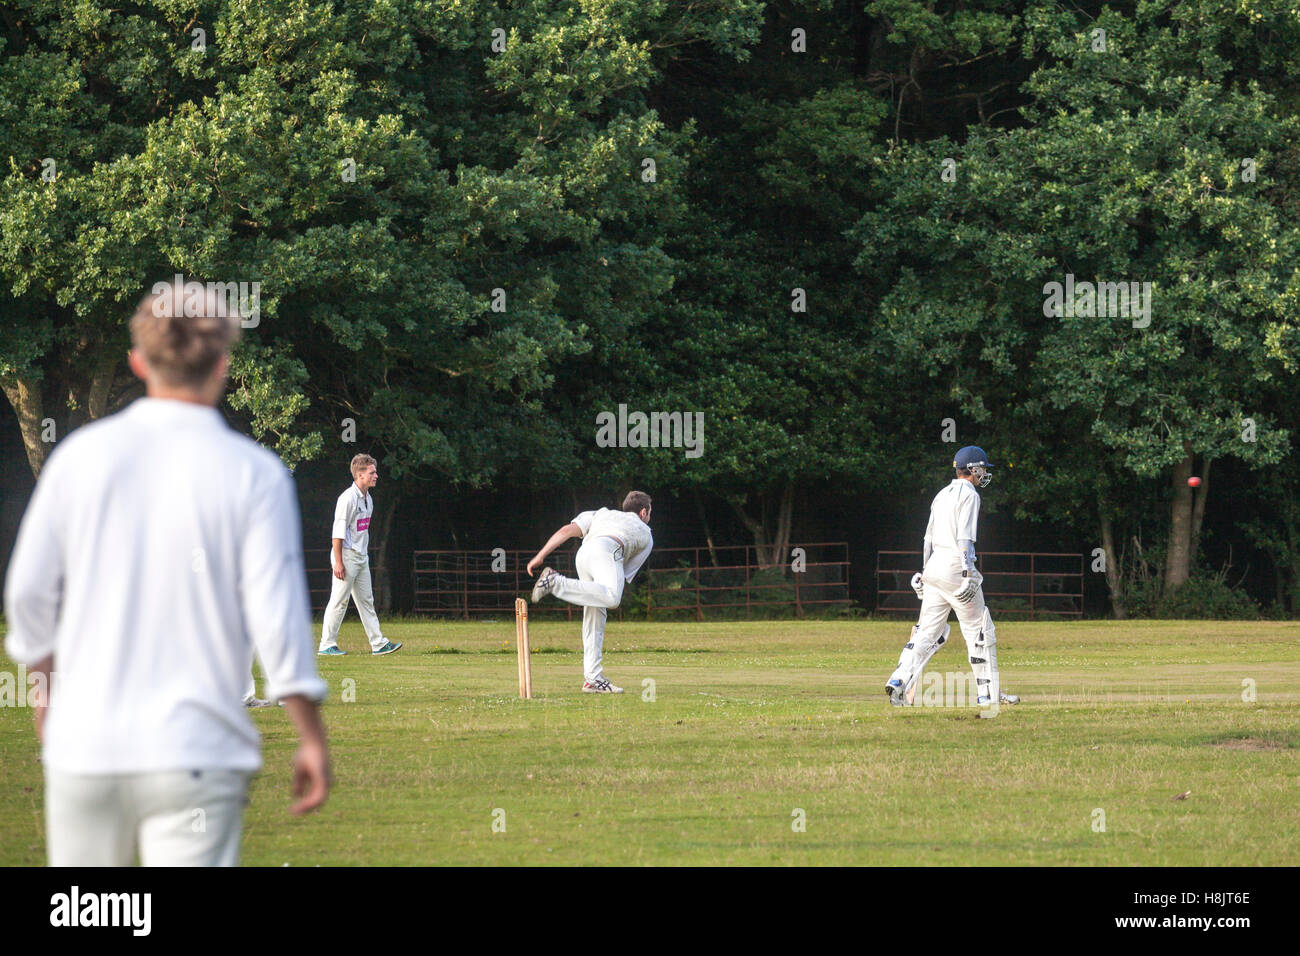 Cricket-Match am Landford. Stockfoto